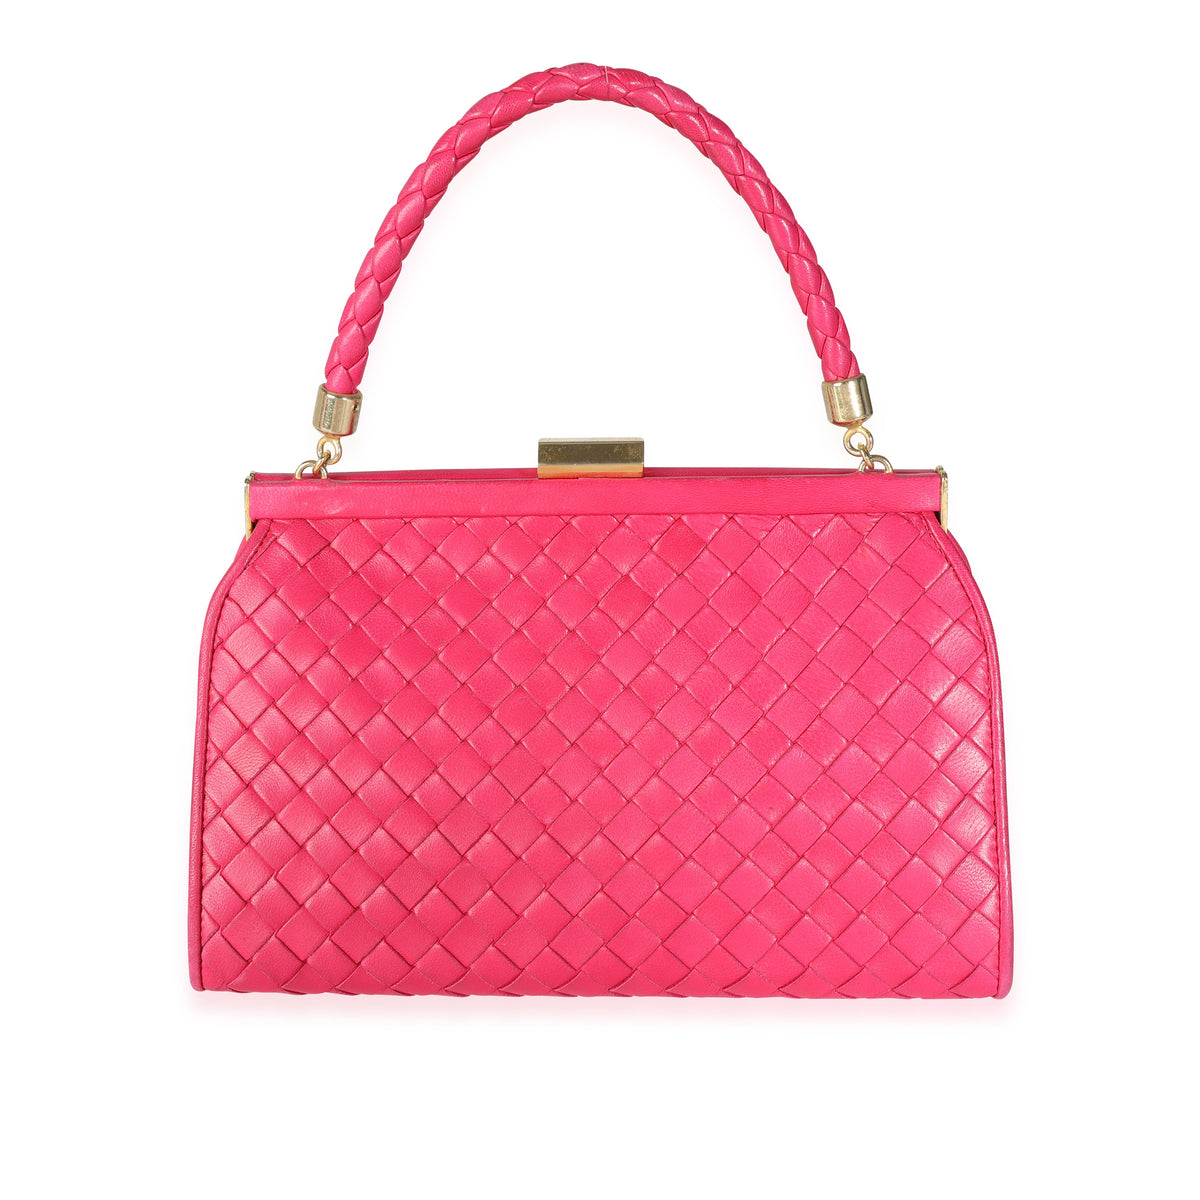 #RARE# Vintage Burberry Pink Handbag With Key Lock!!!